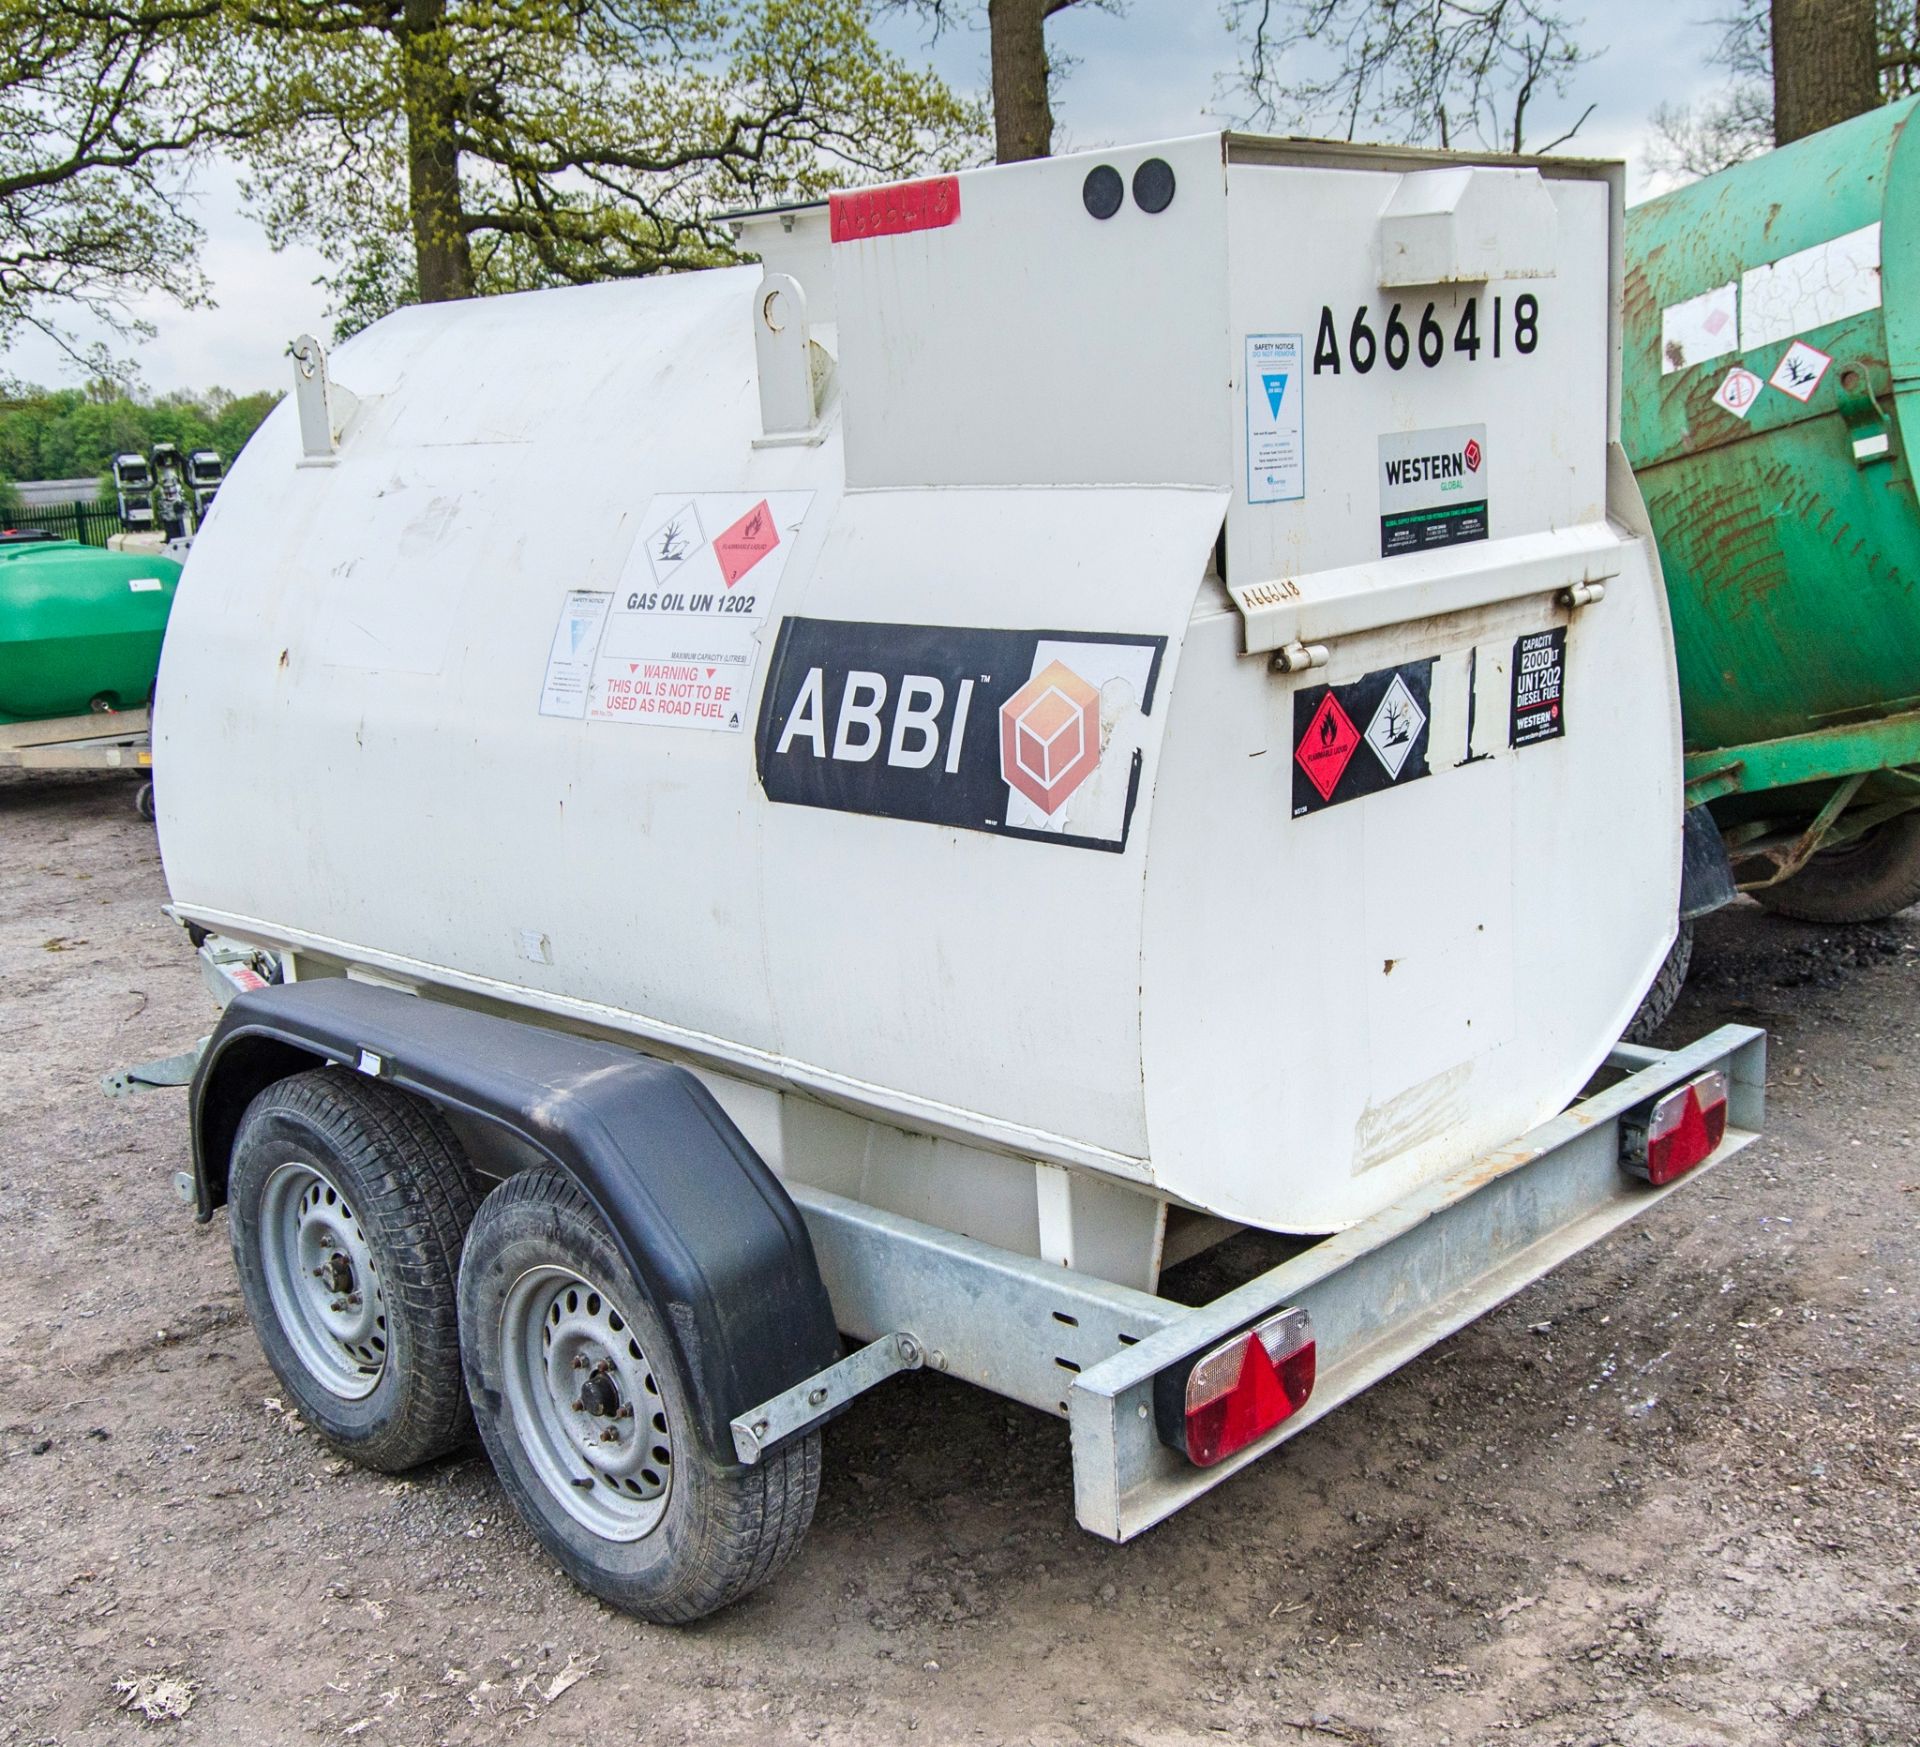 Western Abbi 200 litre tandem axle fast tow mobile bunded fuel bowser c/w manual pump, delivery hose - Bild 4 aus 7